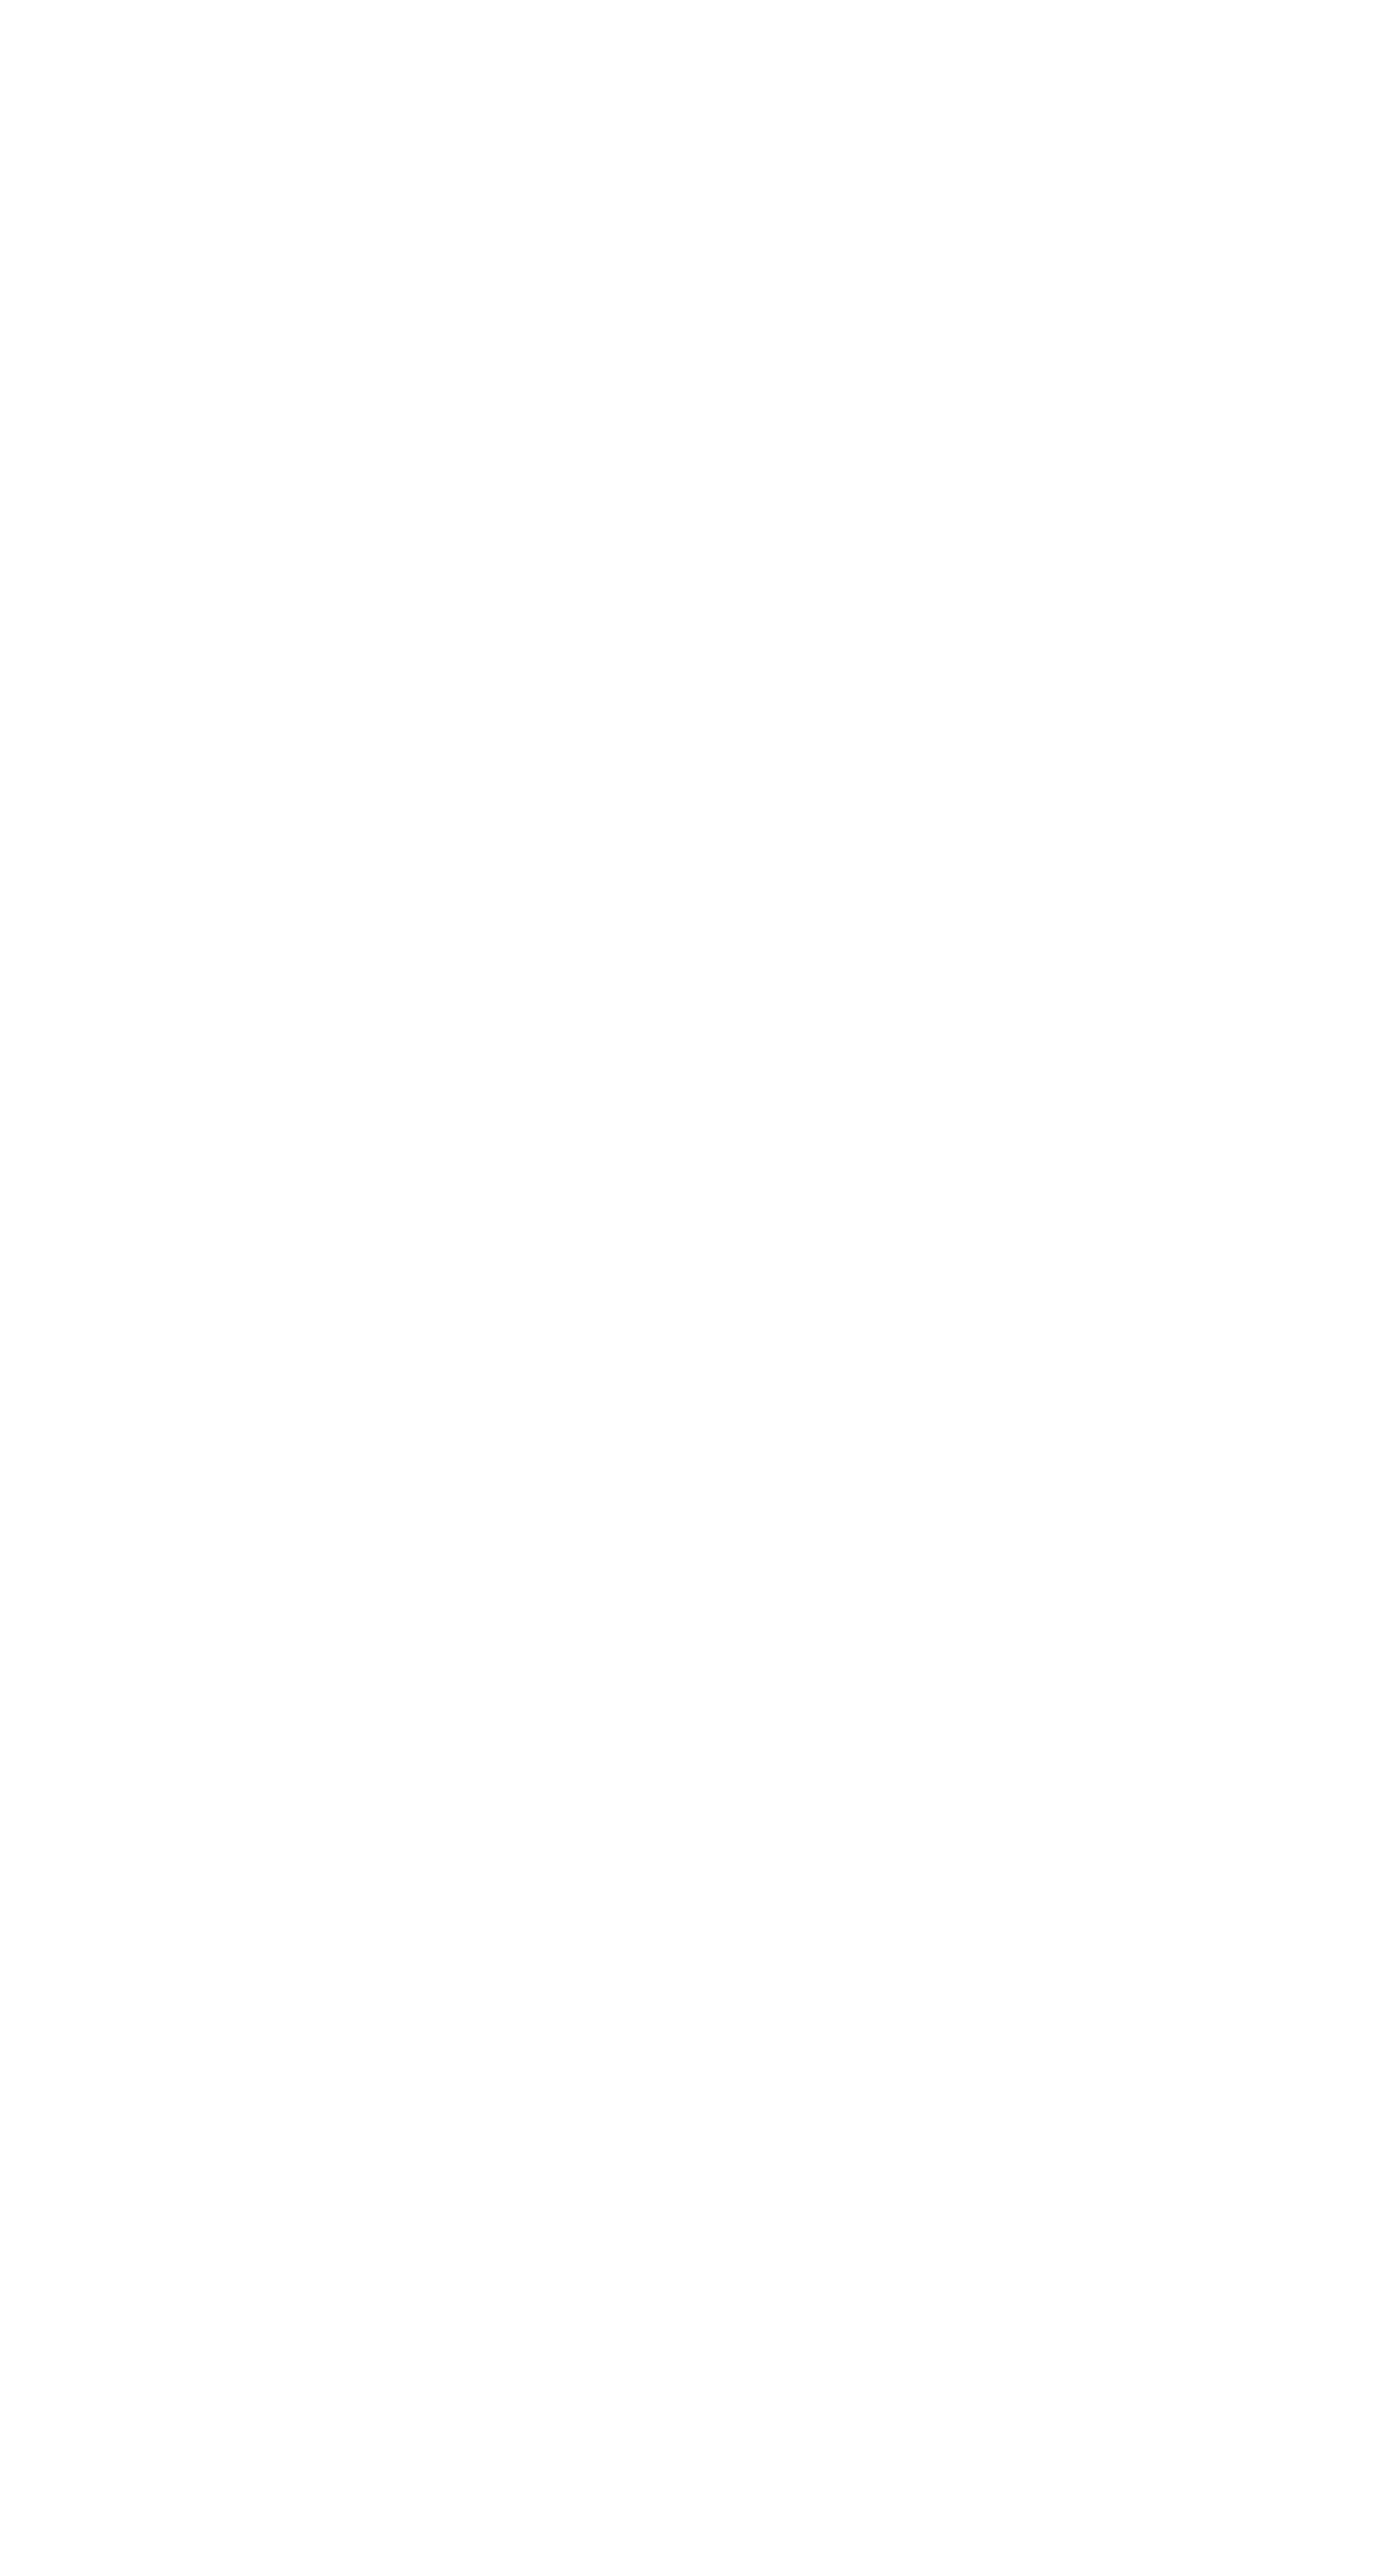 Two Ducks logo mark